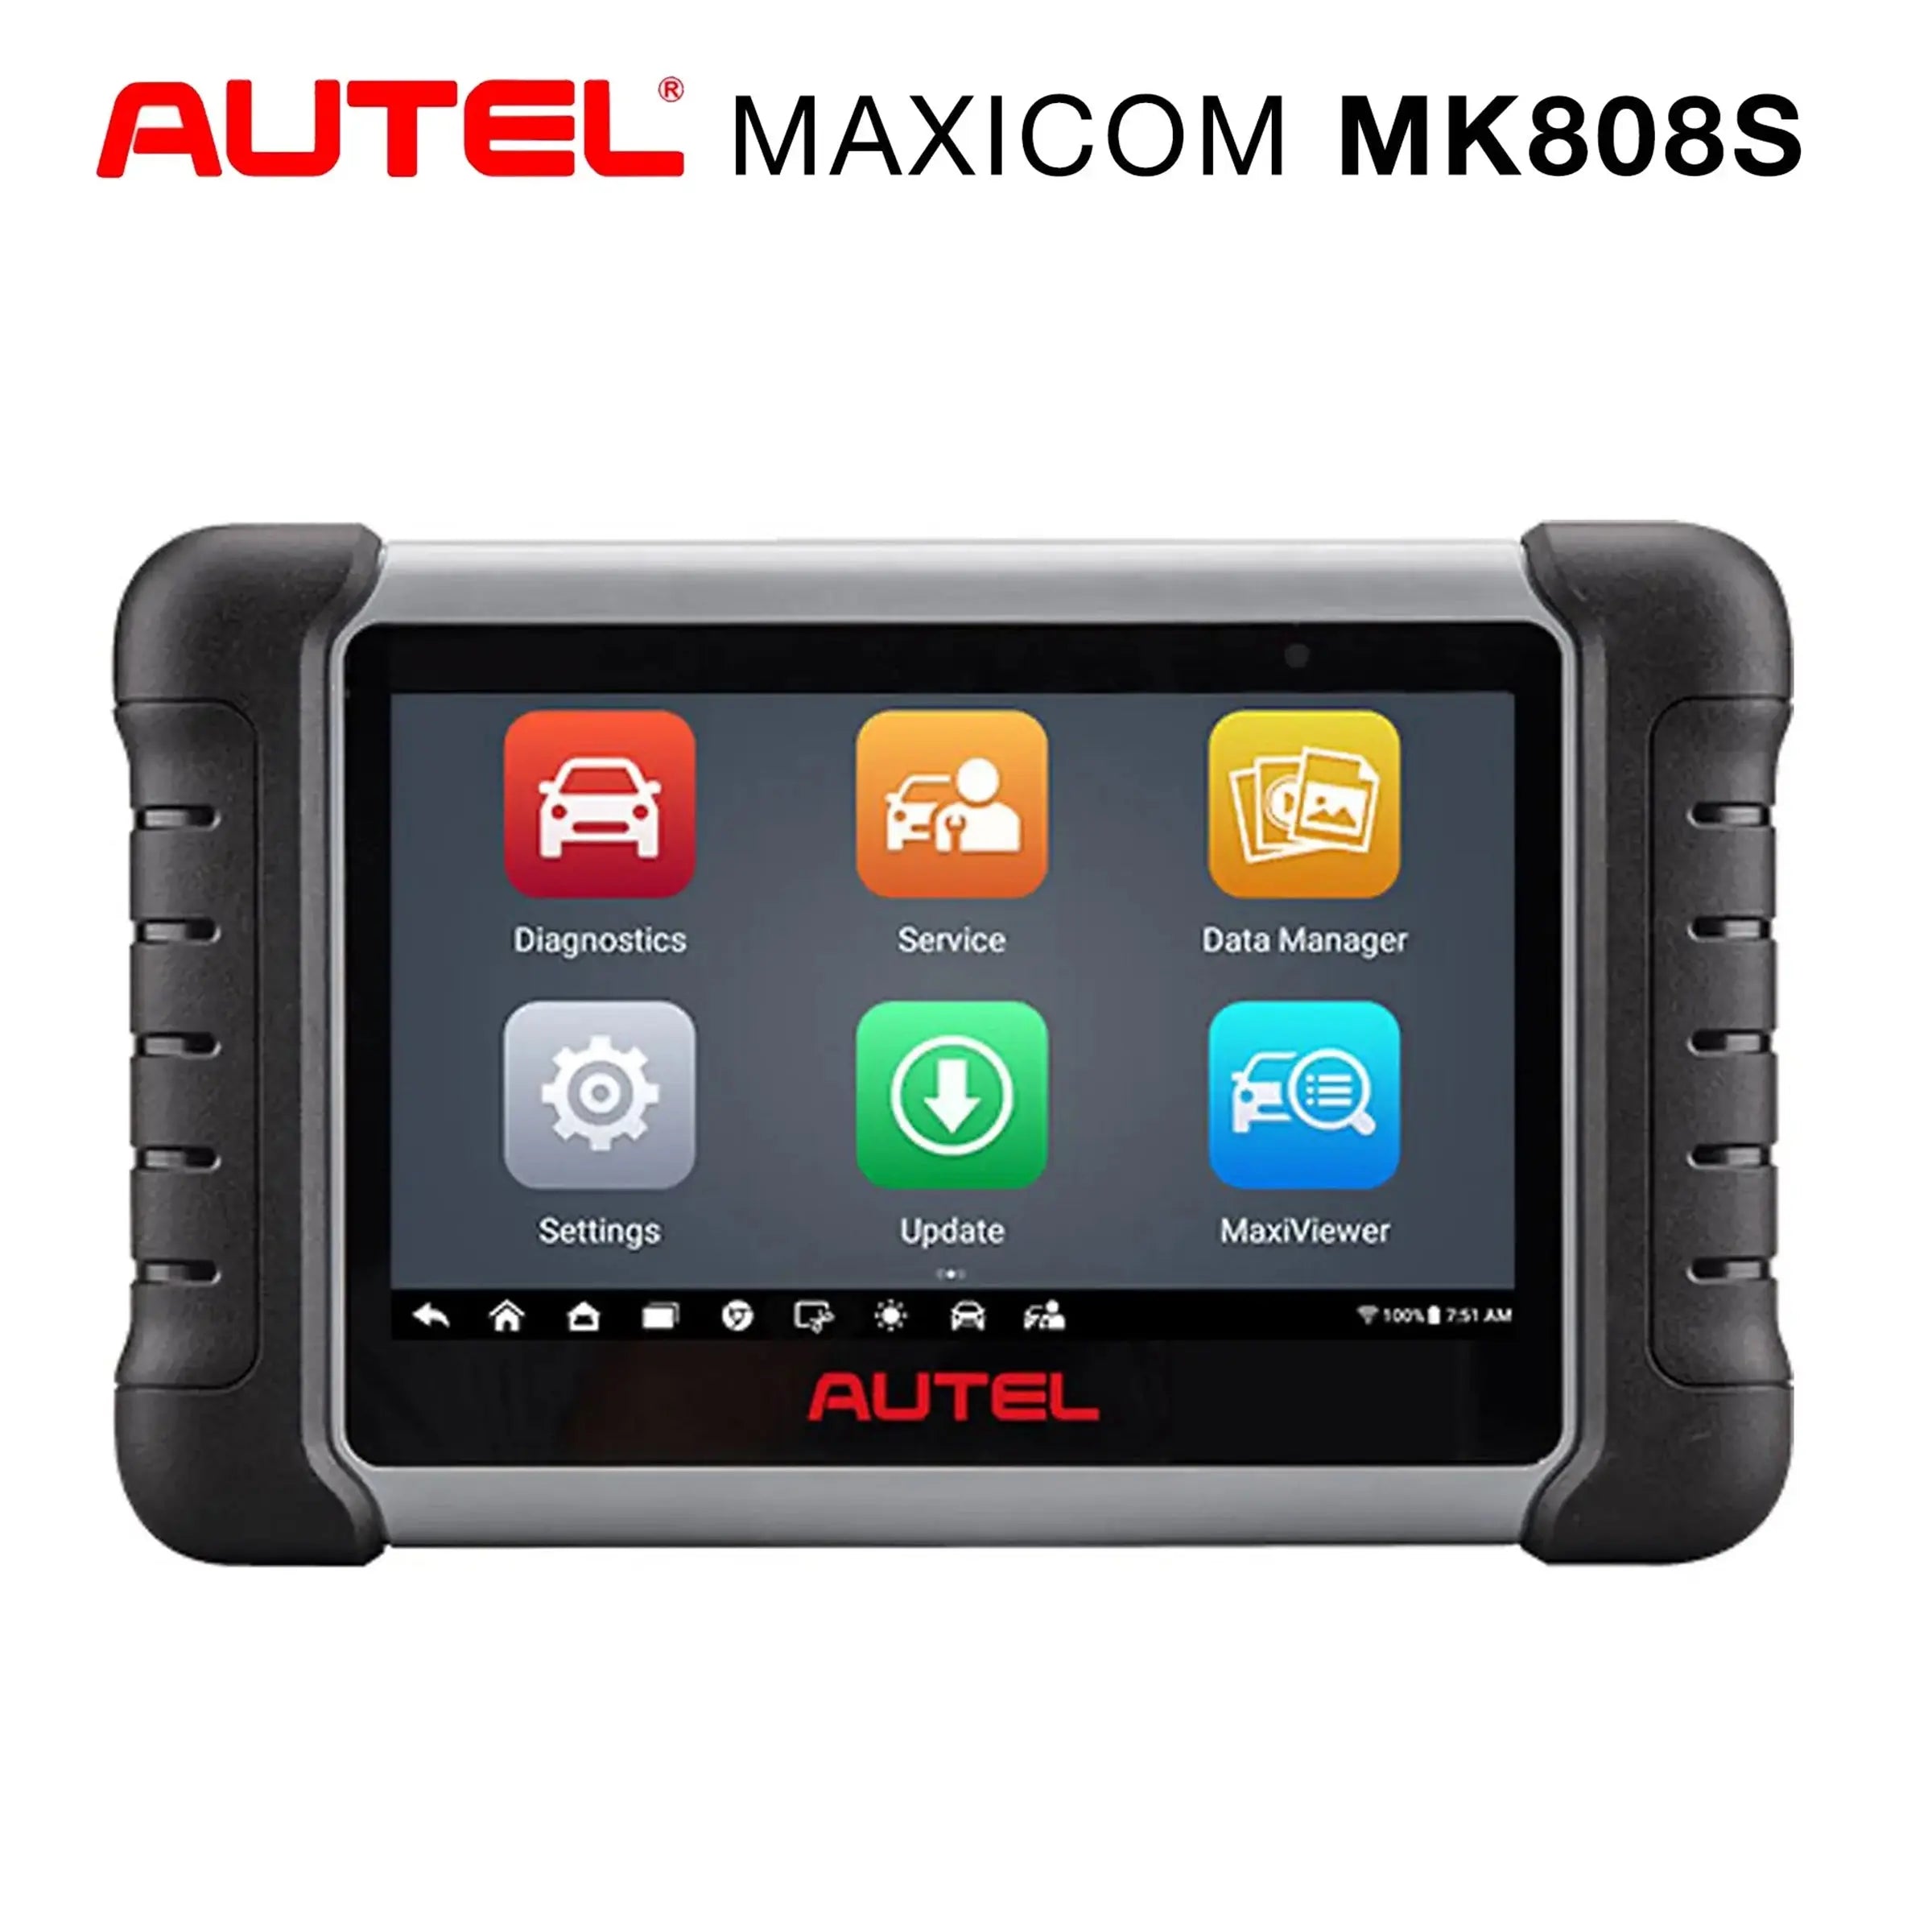 Autel MaxiCheck MX808S OBD2 Scanner: 2023 Full Bidirectional